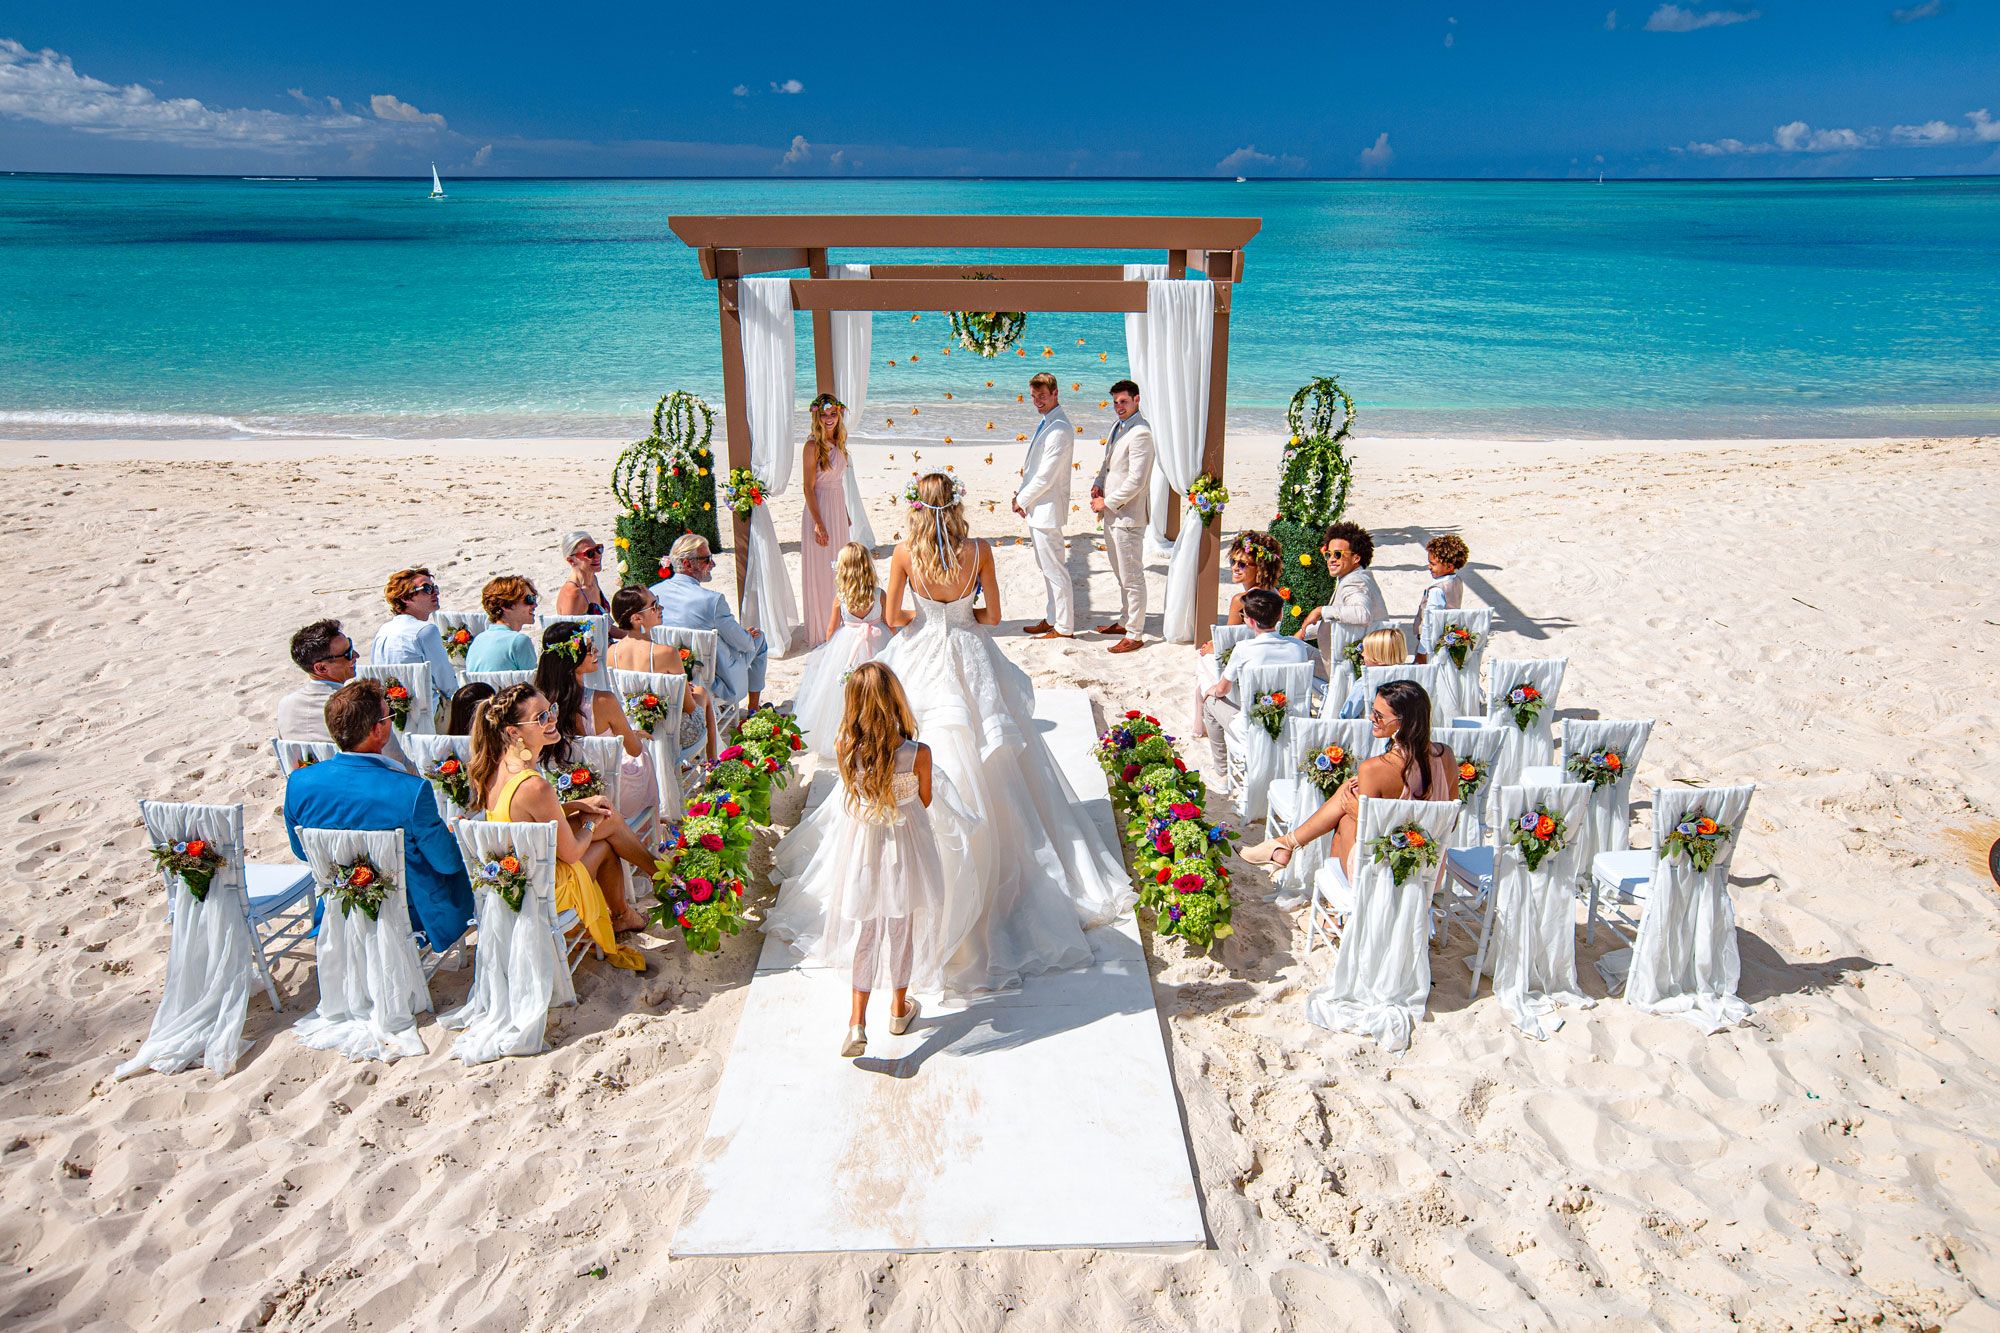 https://www.beaches.com/blog/content/images/2019/11/Beaches-Turks-Caicos-Beach-Wedding3-1.jpg